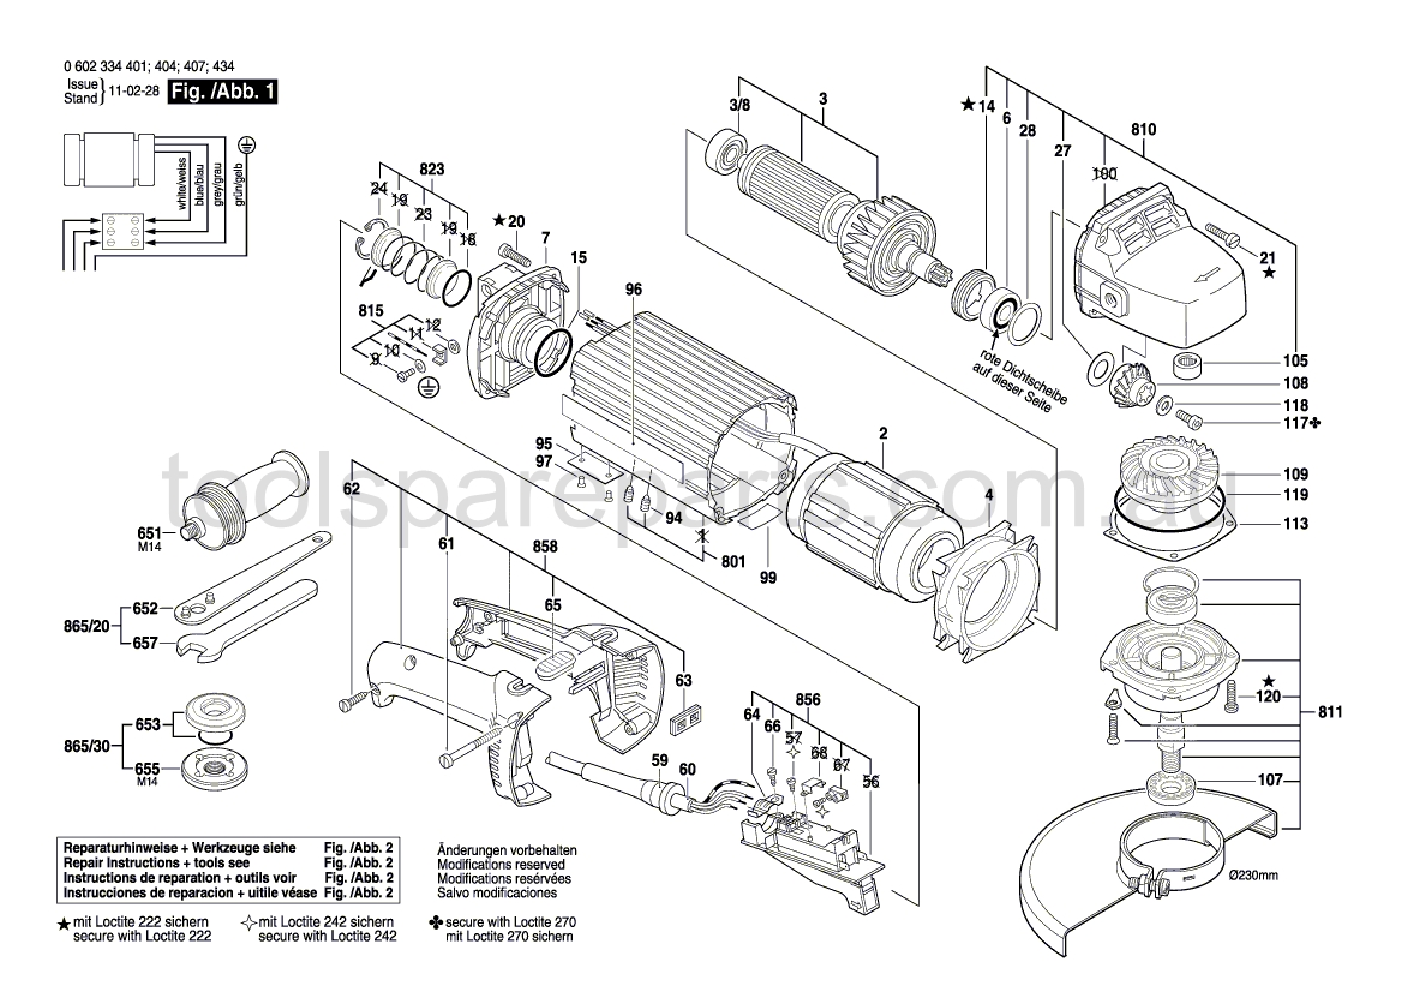 Bosch ---- 0602334401  Diagram 1